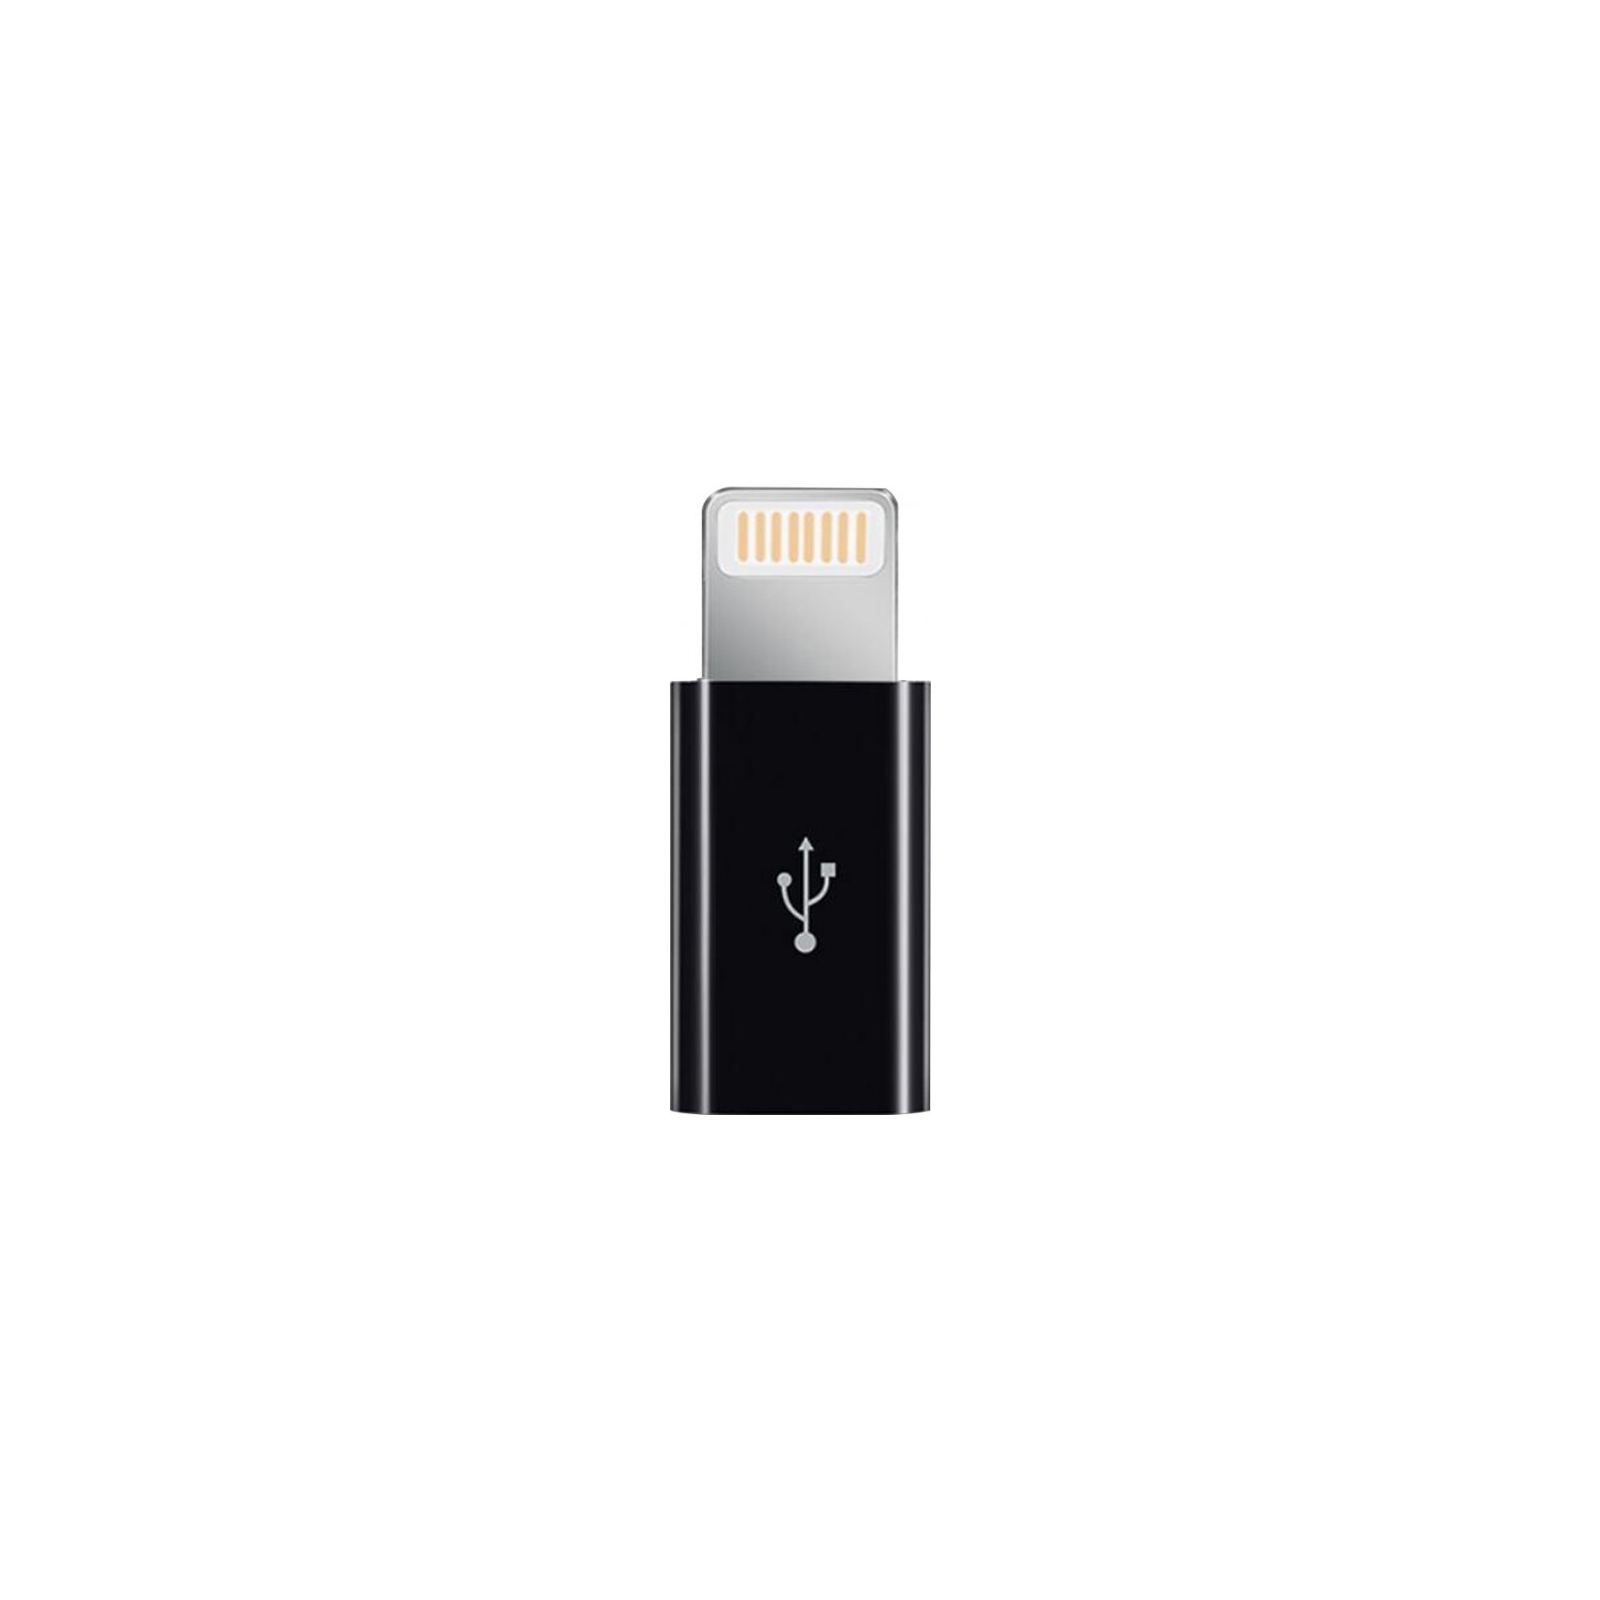 Переходник Micro USB to Lightning black XoKo (XK-AC030-BK)